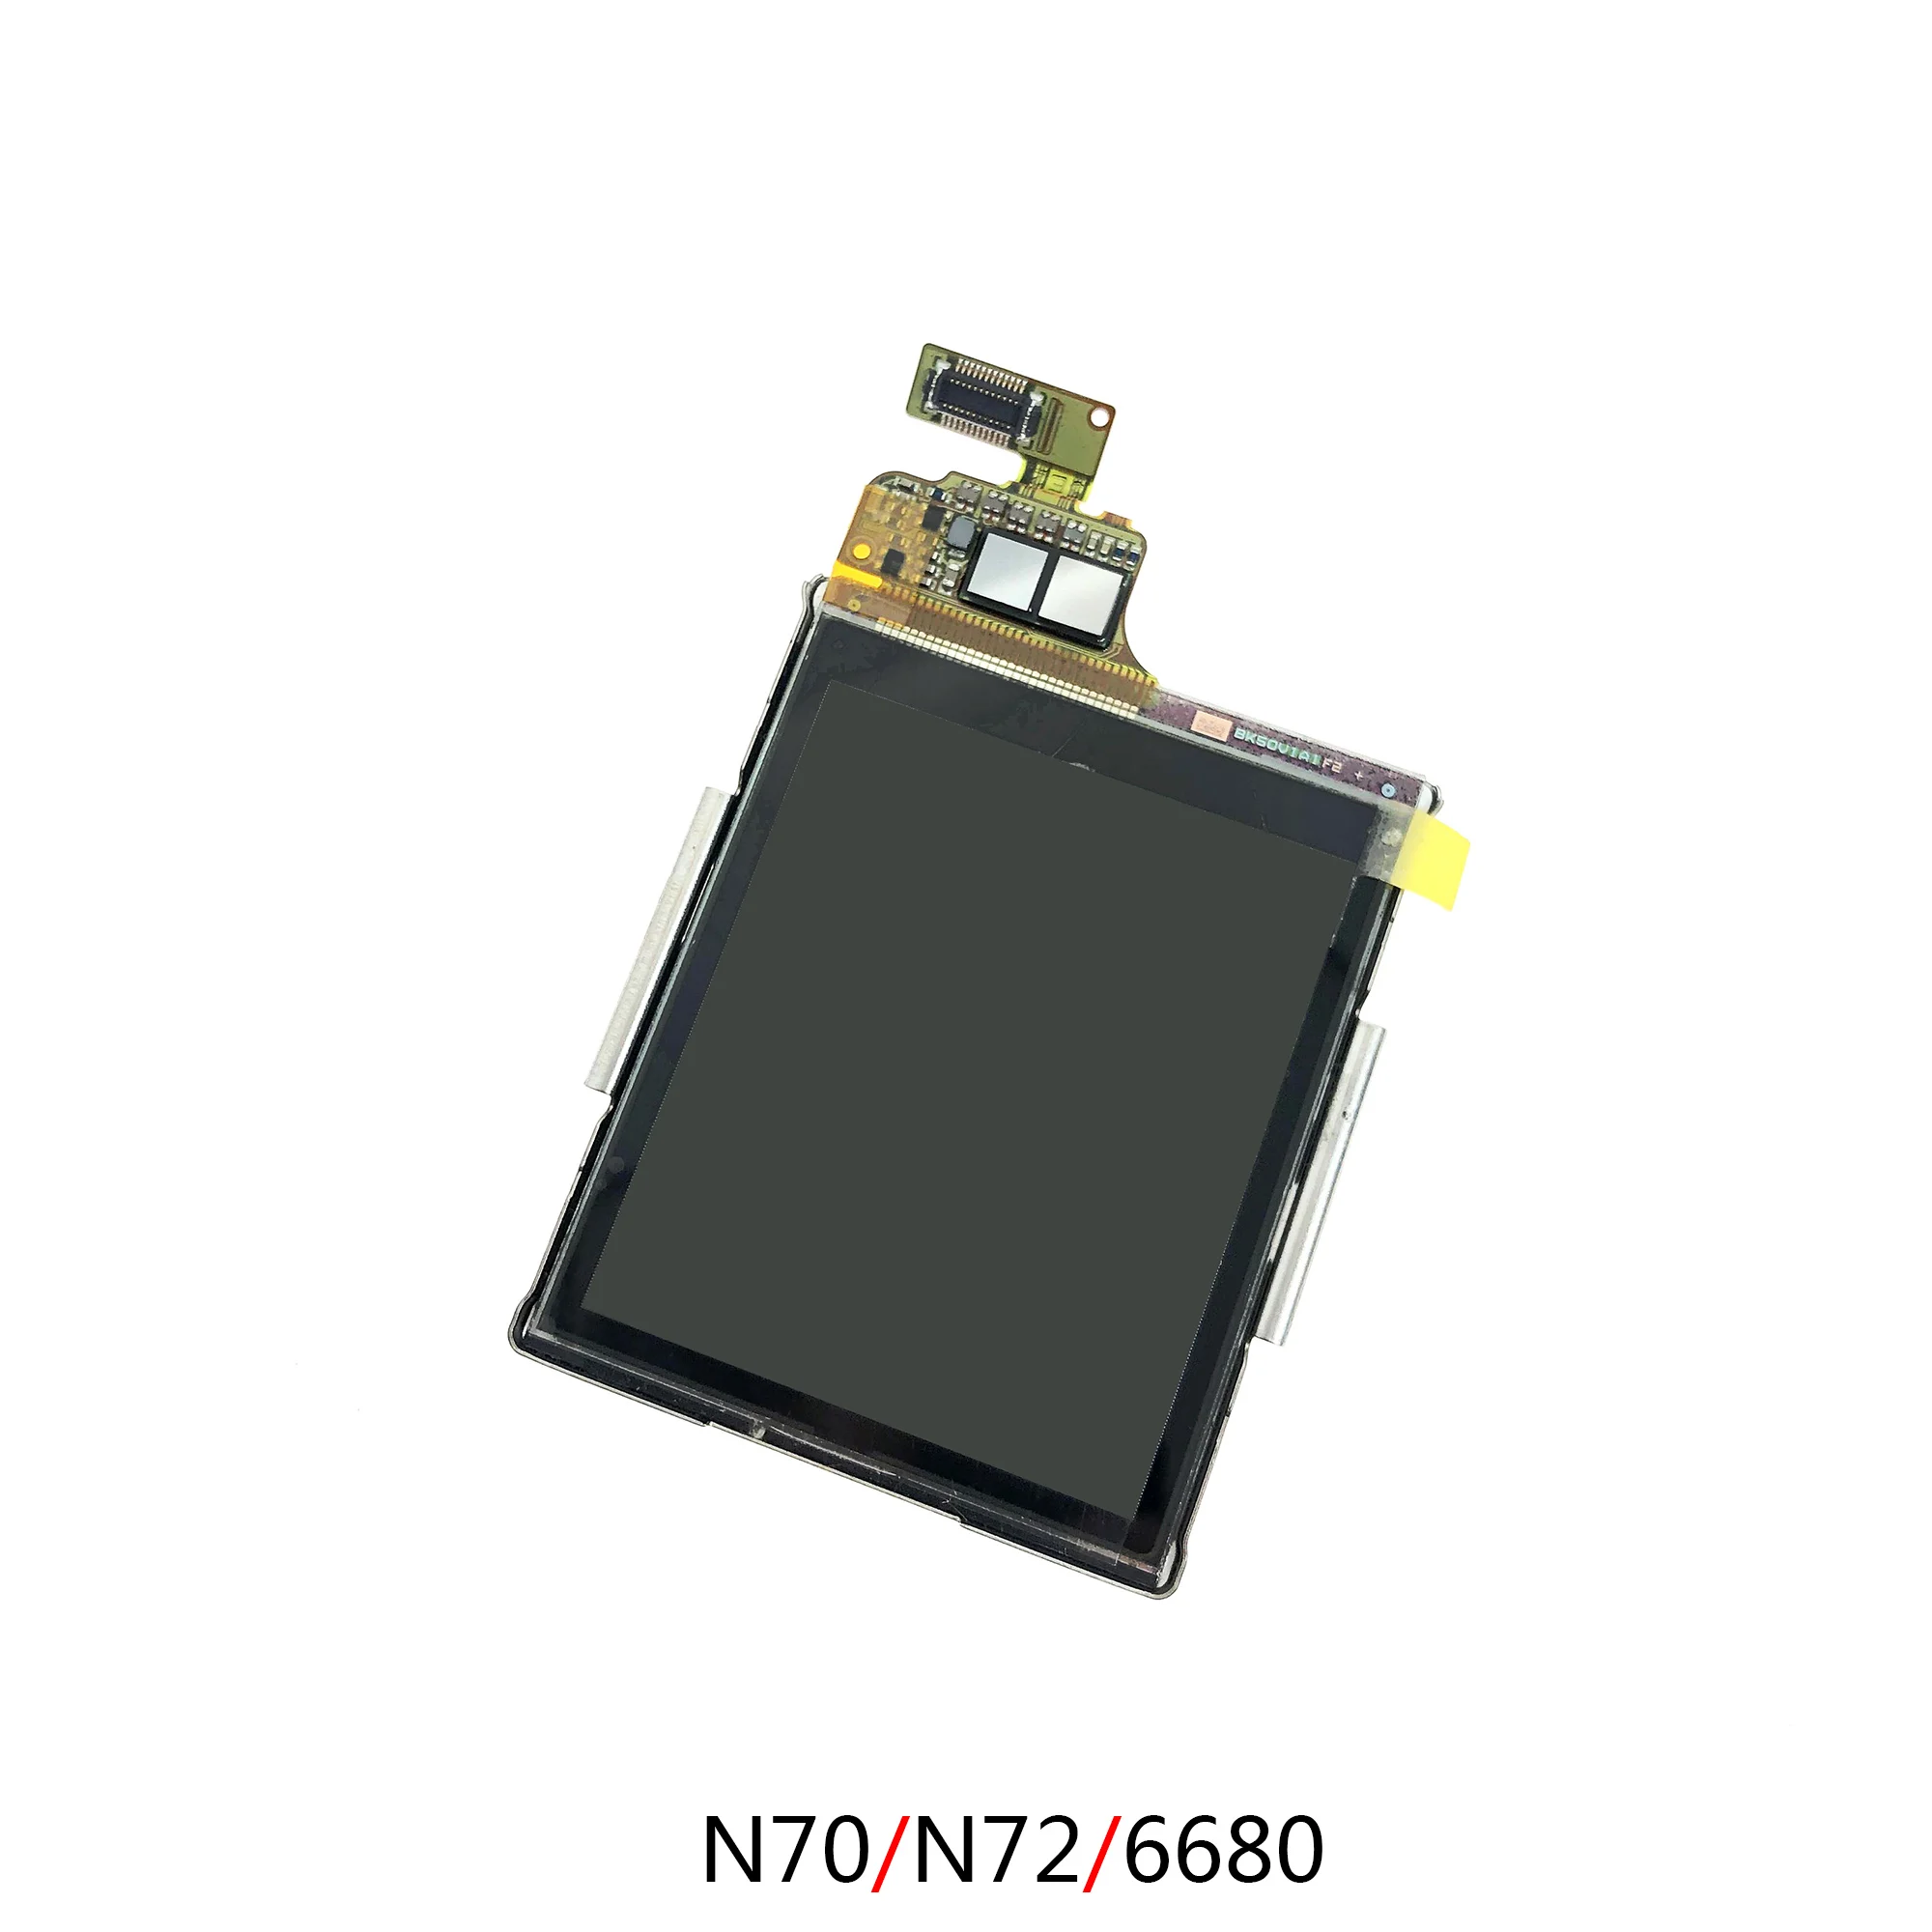 Mobile phone Complete LCD Display For Nokia N91 6681 N70 N72 Parts -  AliExpress